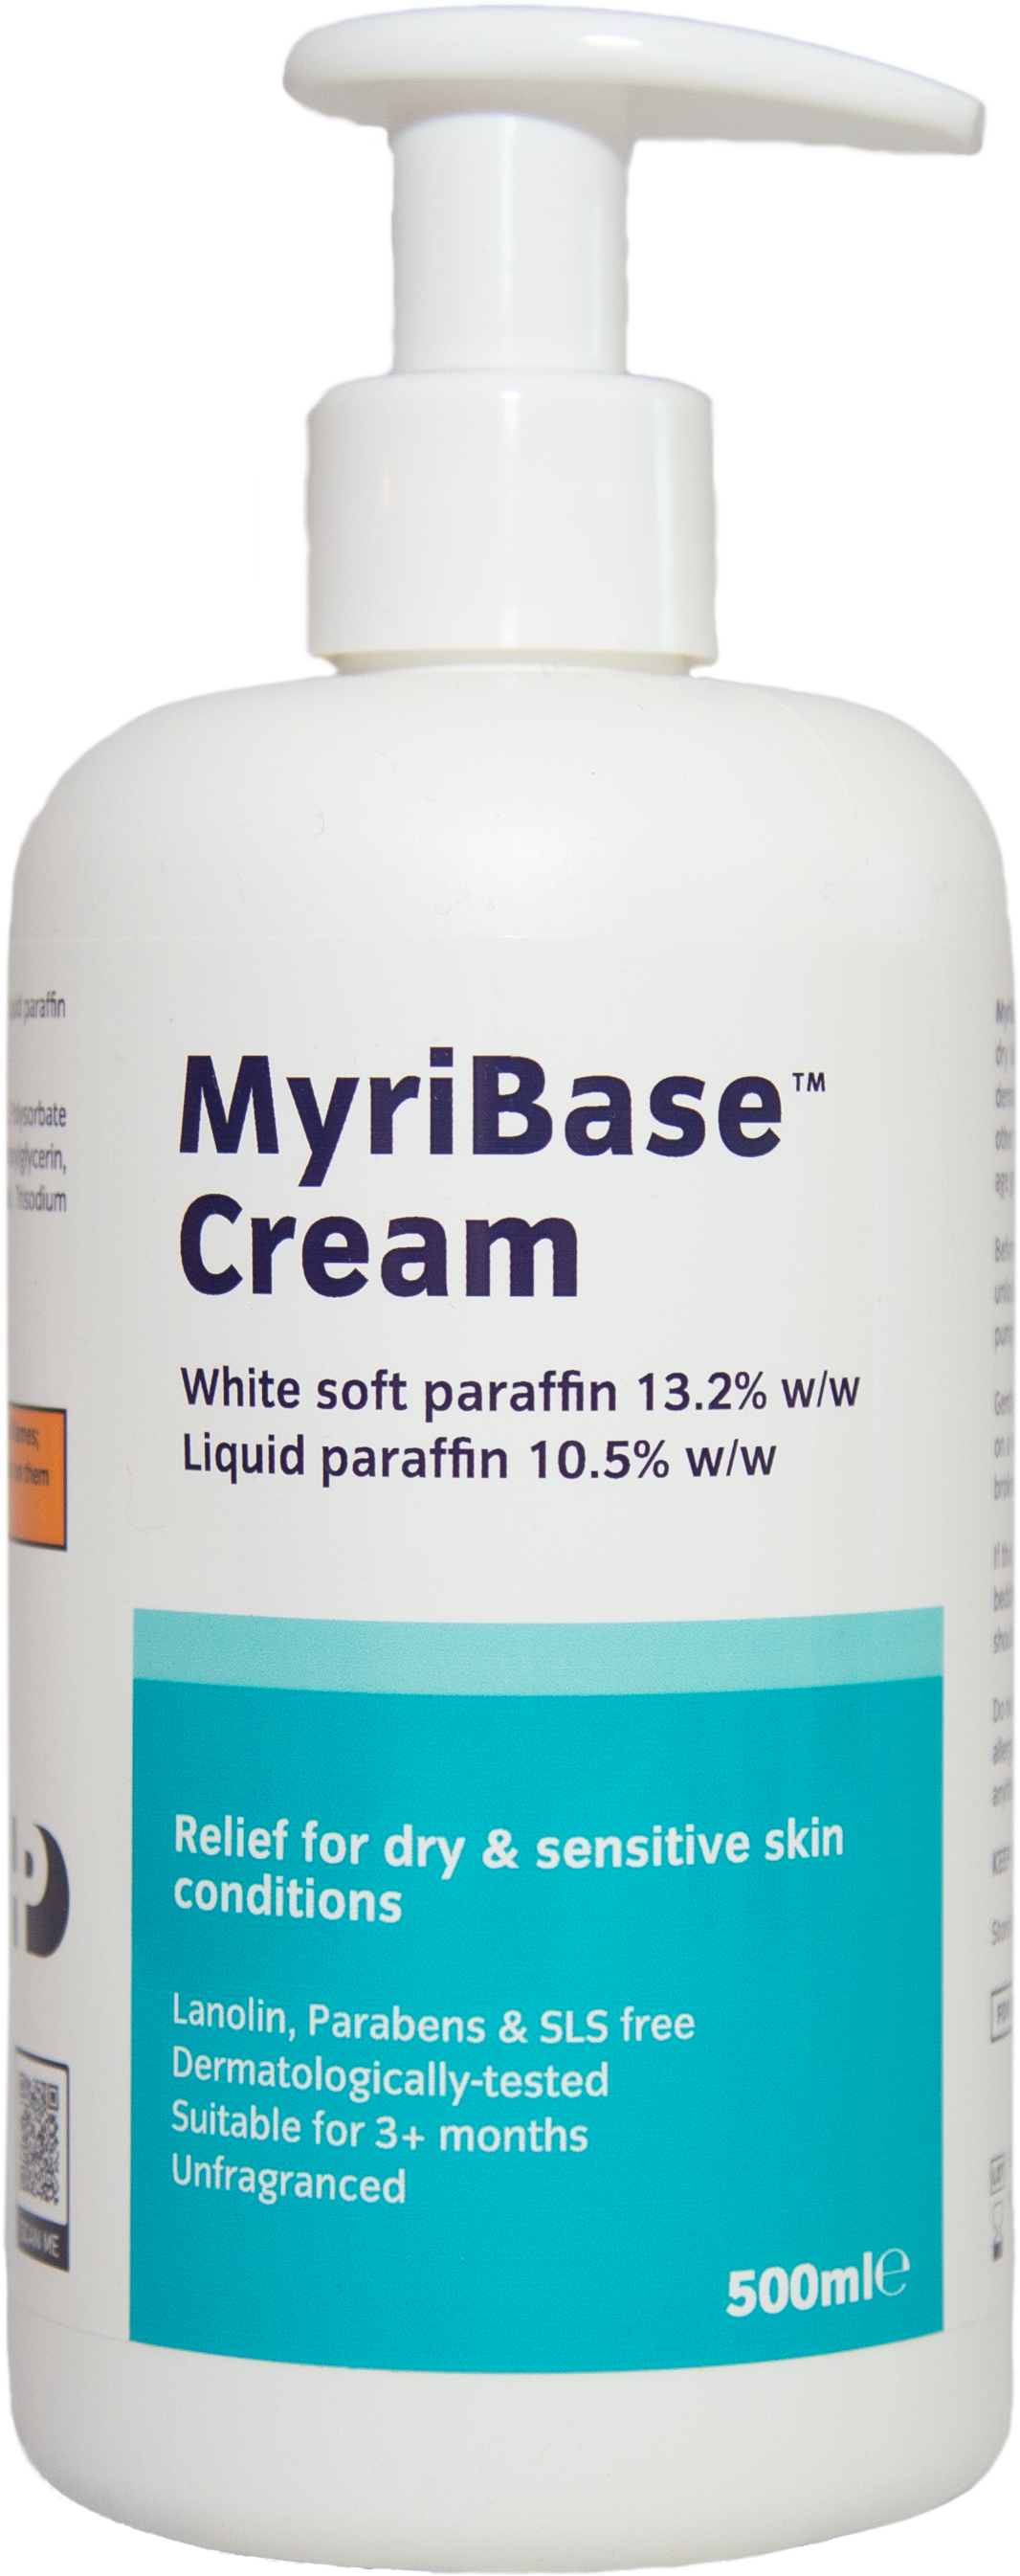 Myribase Cream